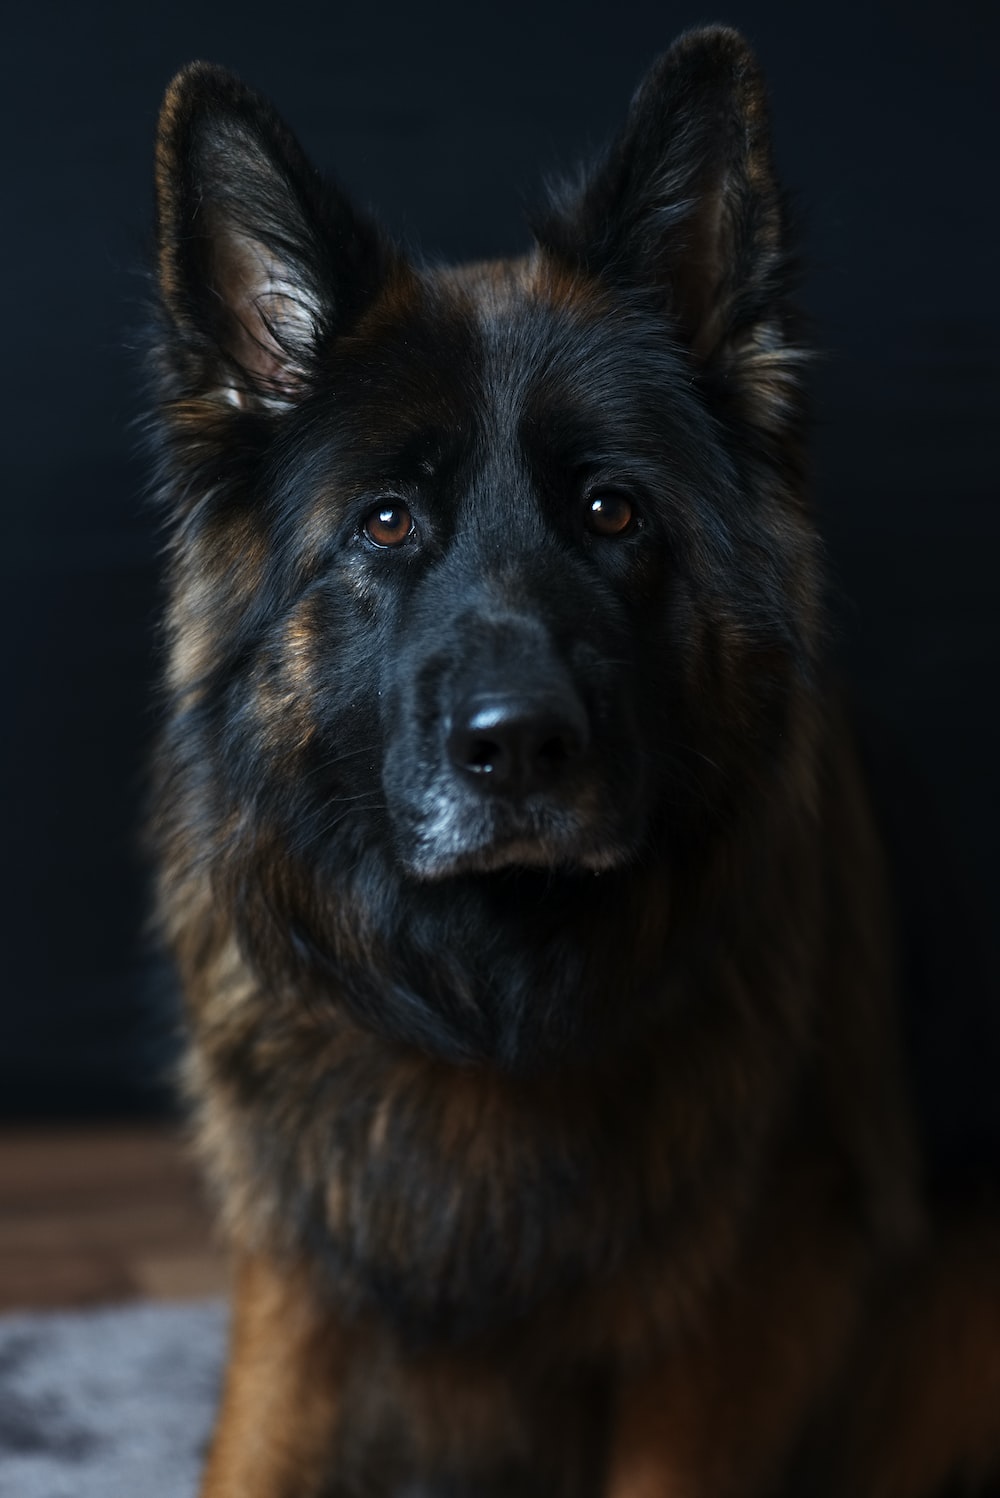 German Shepherd Dog Picture [HD]. Download Free Image